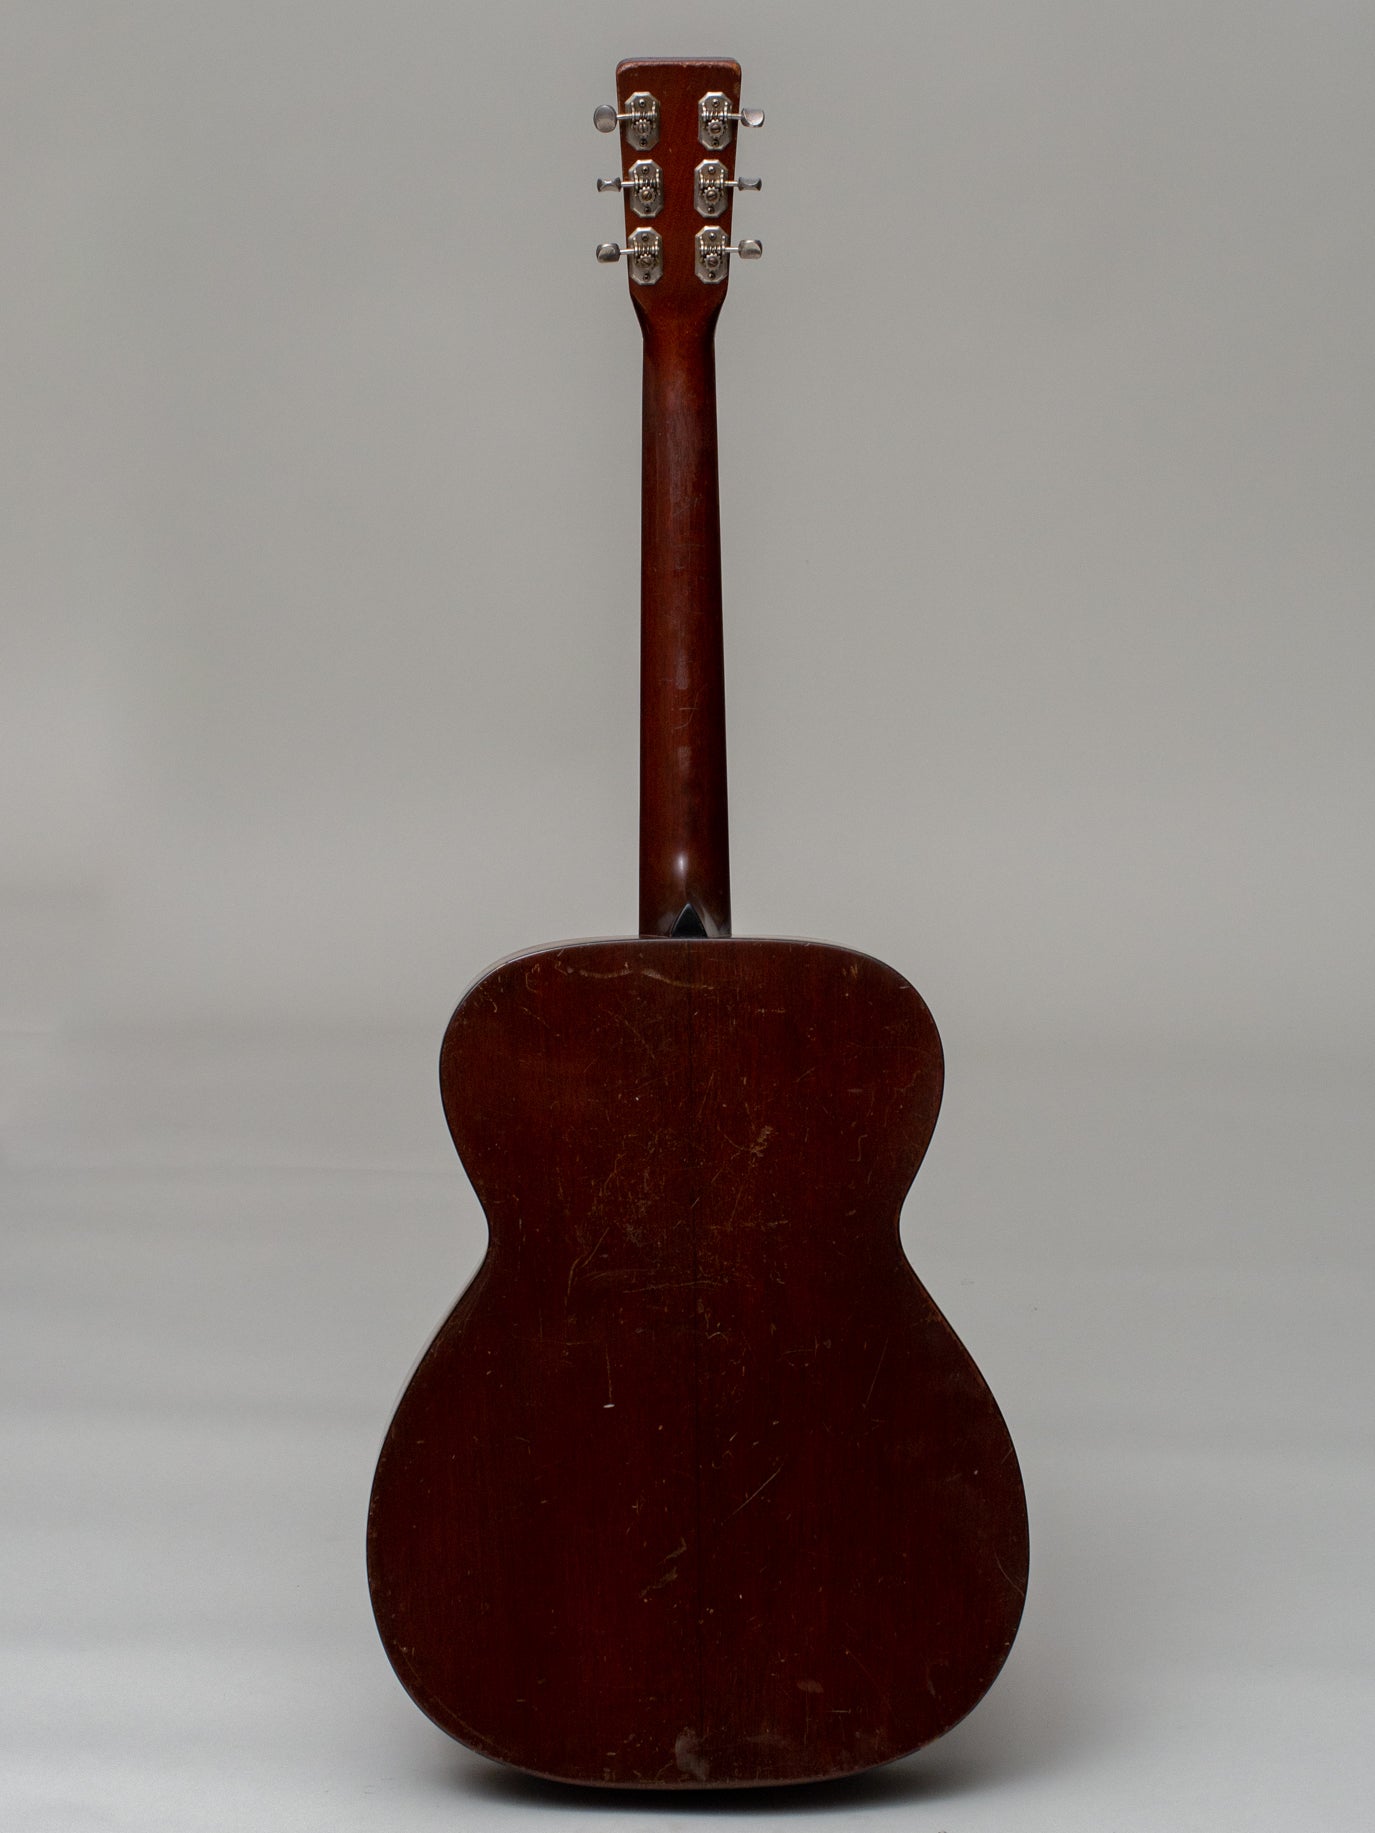 1946 Martin 000-18